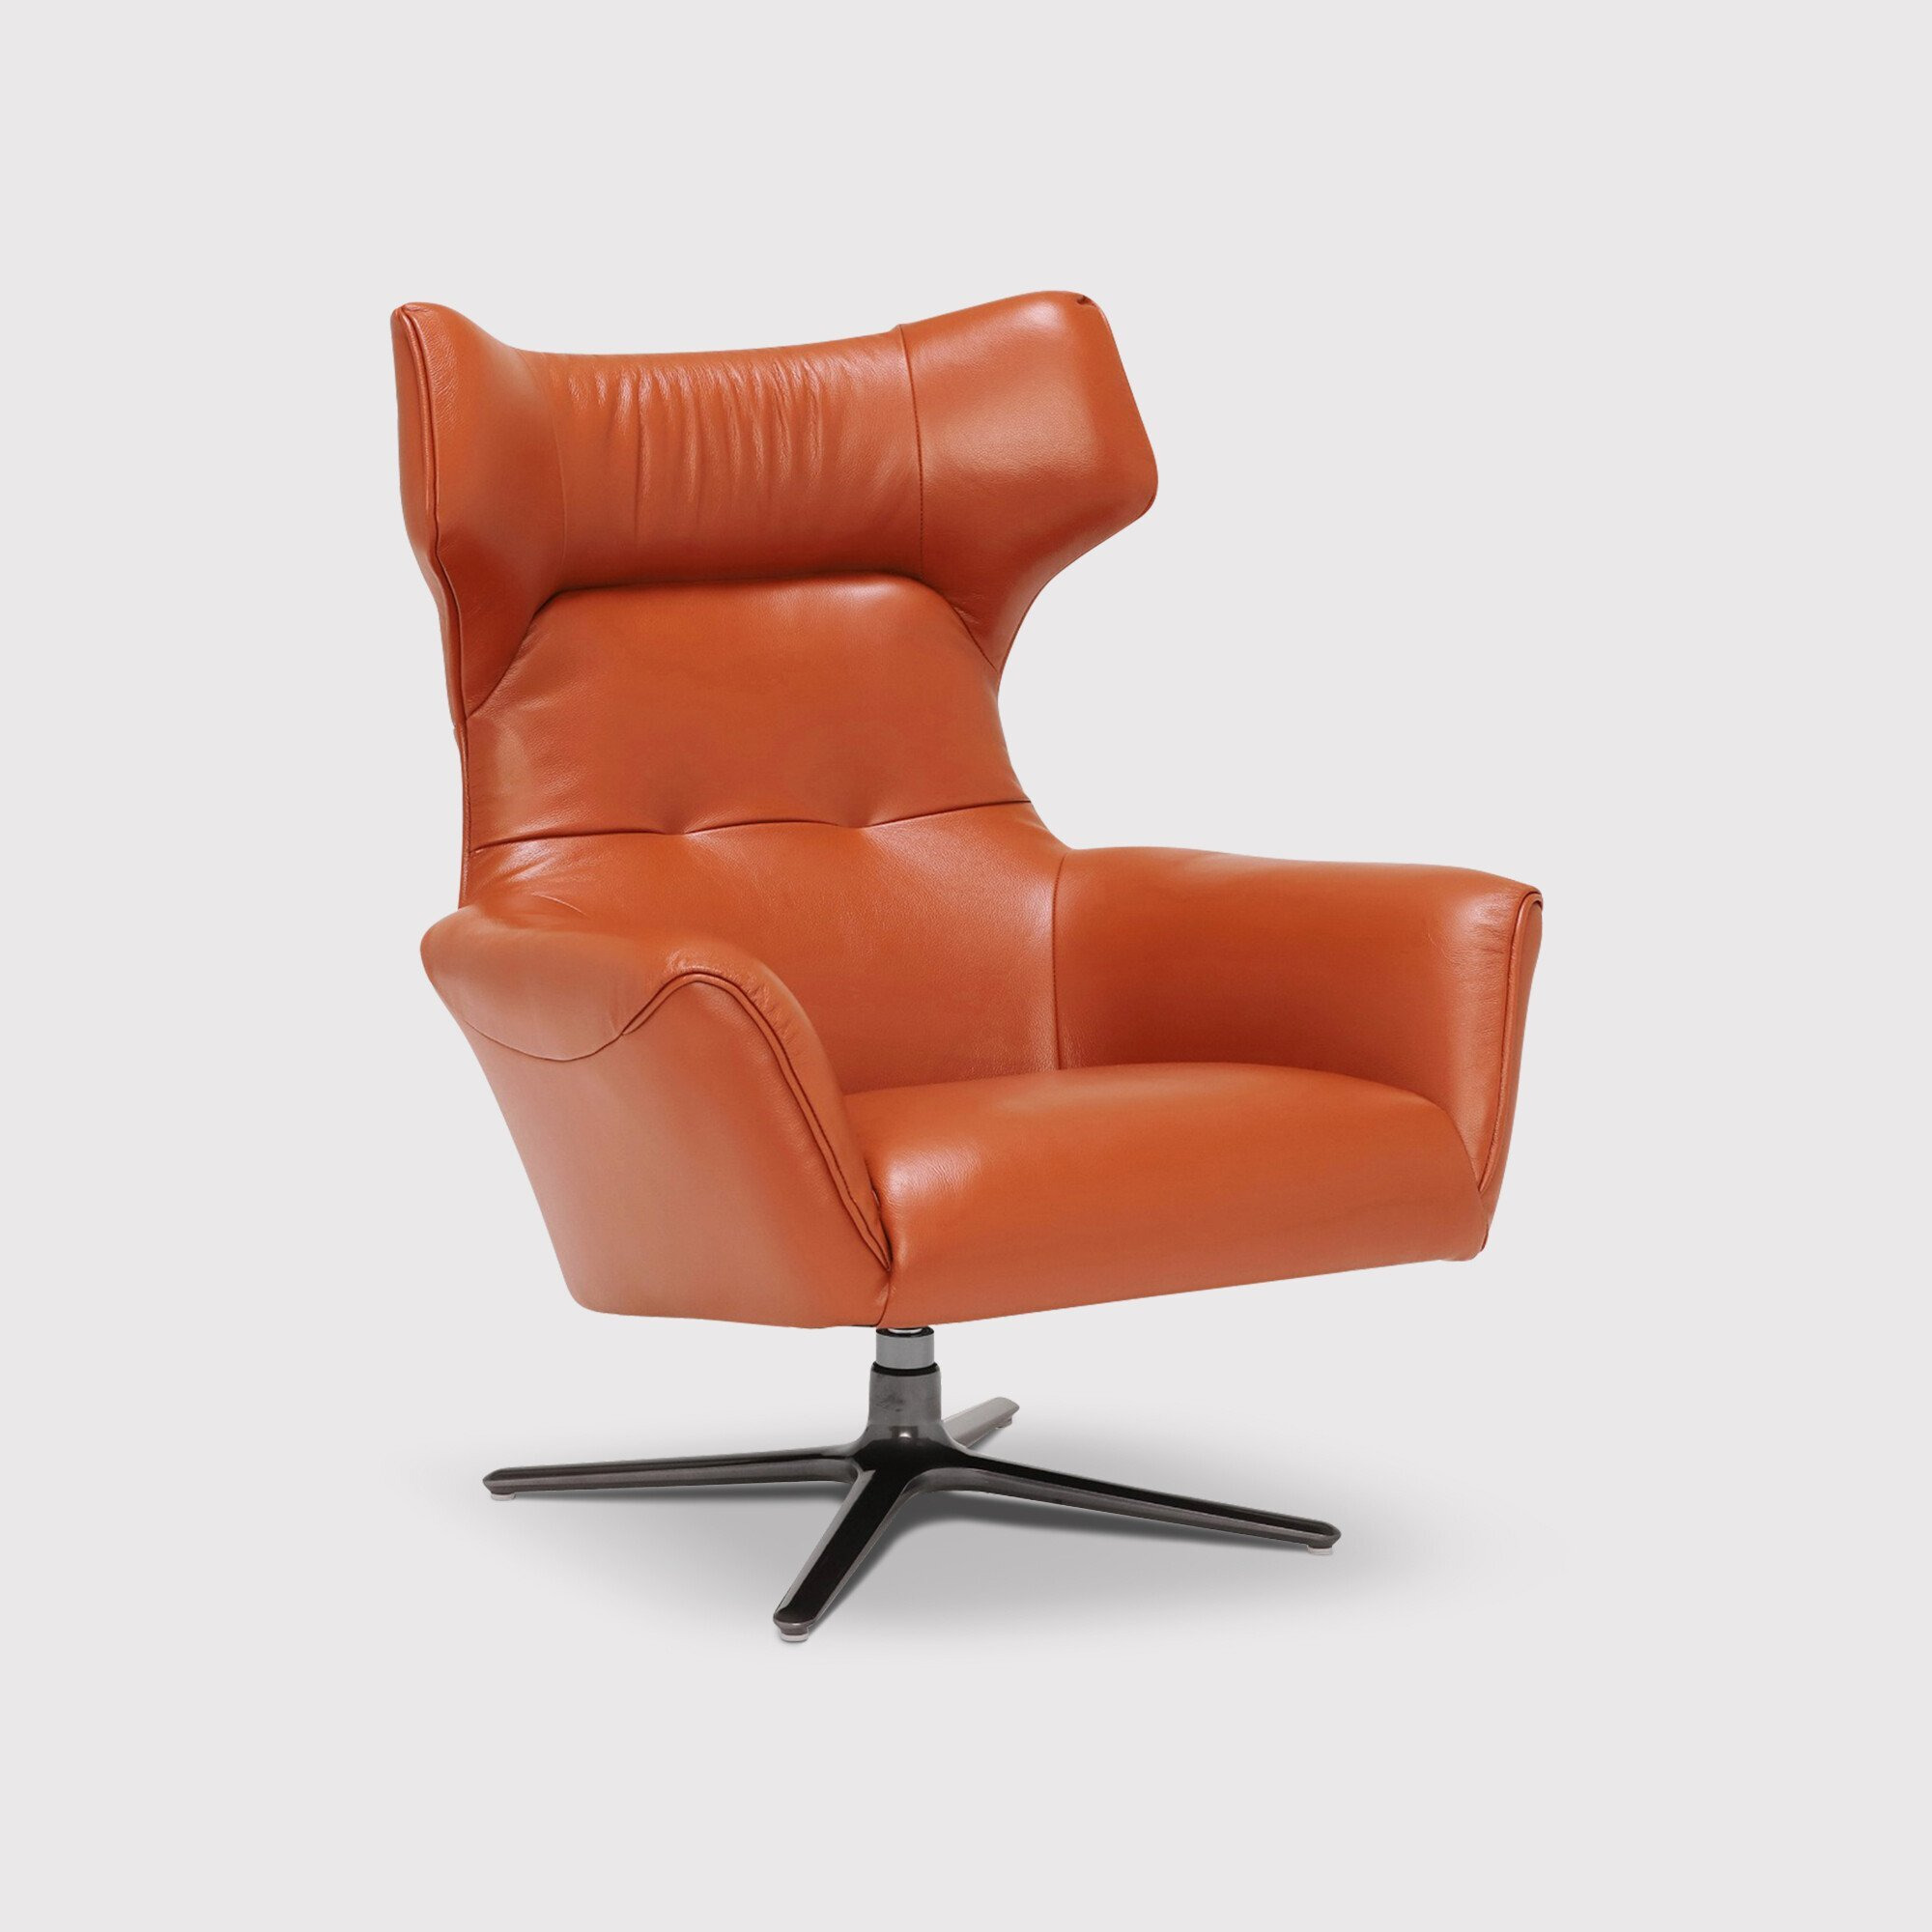 Jax Swivel Armchair, Orange Leather - Barker & Stonehouse - image 1